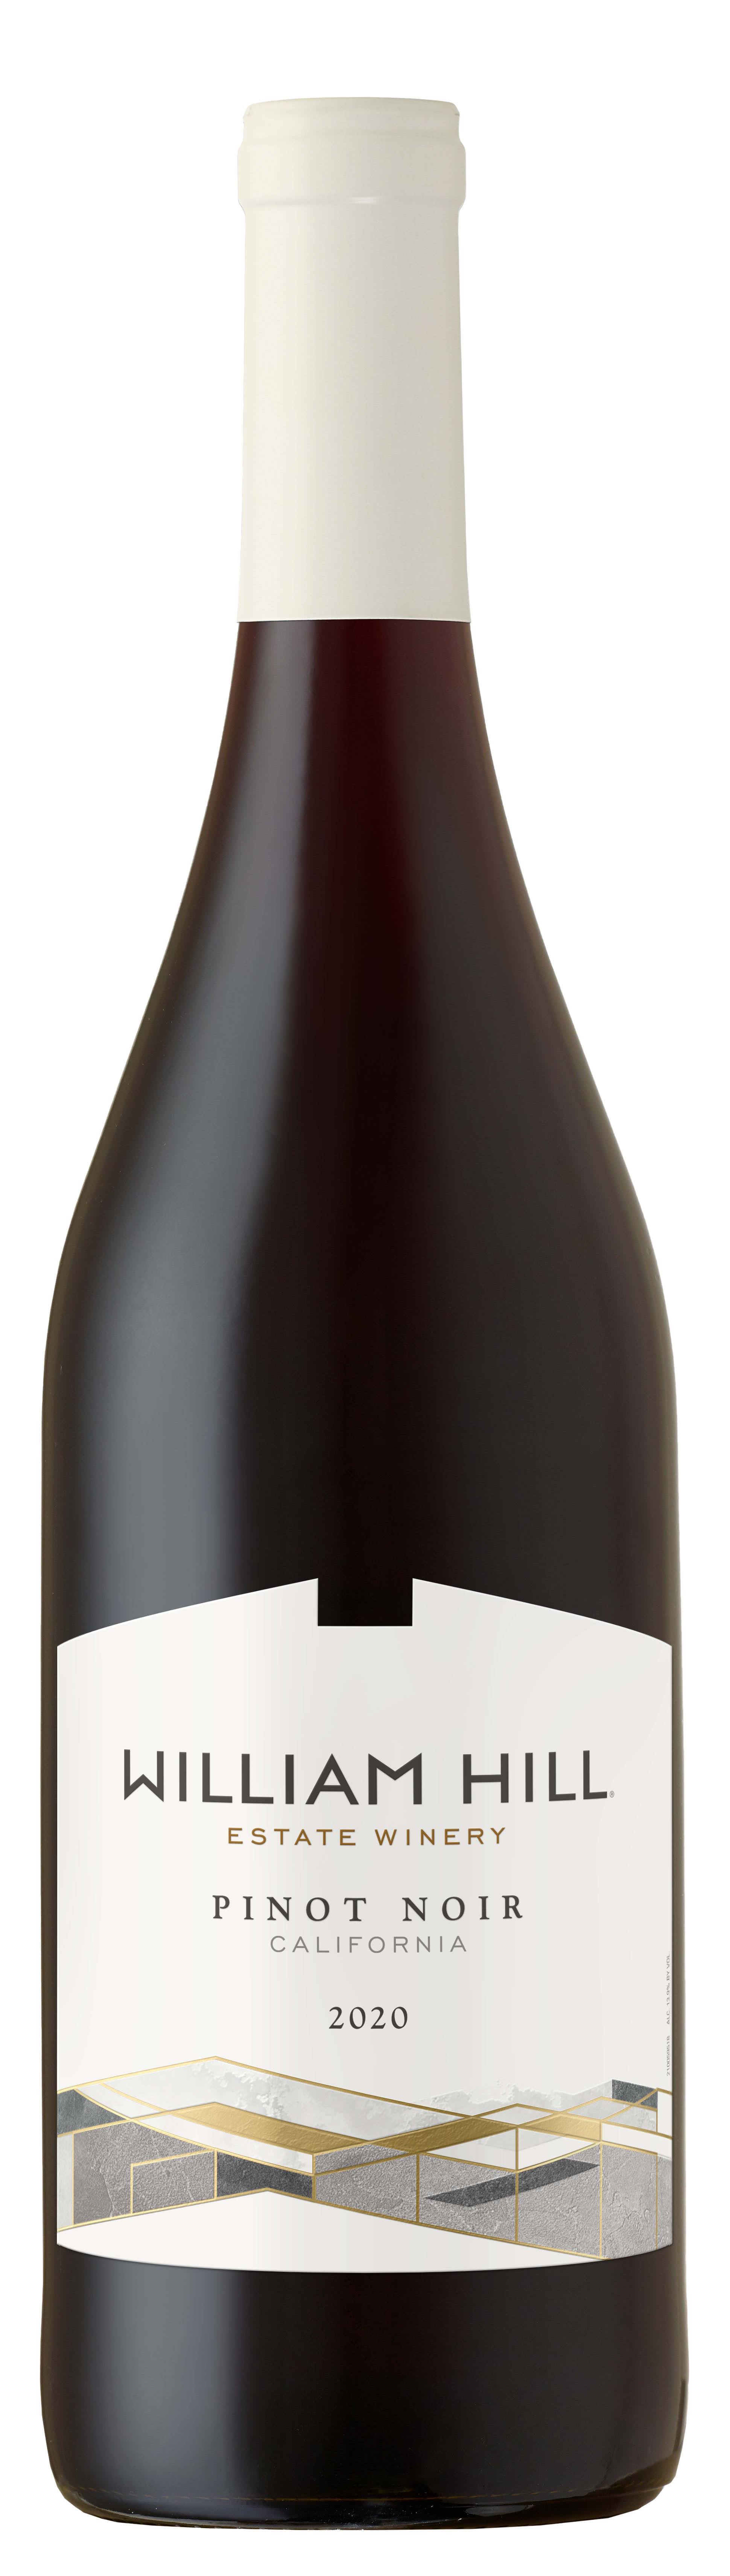 William Hill Pinot Noir, Central Coast, 2013 - 750 ml